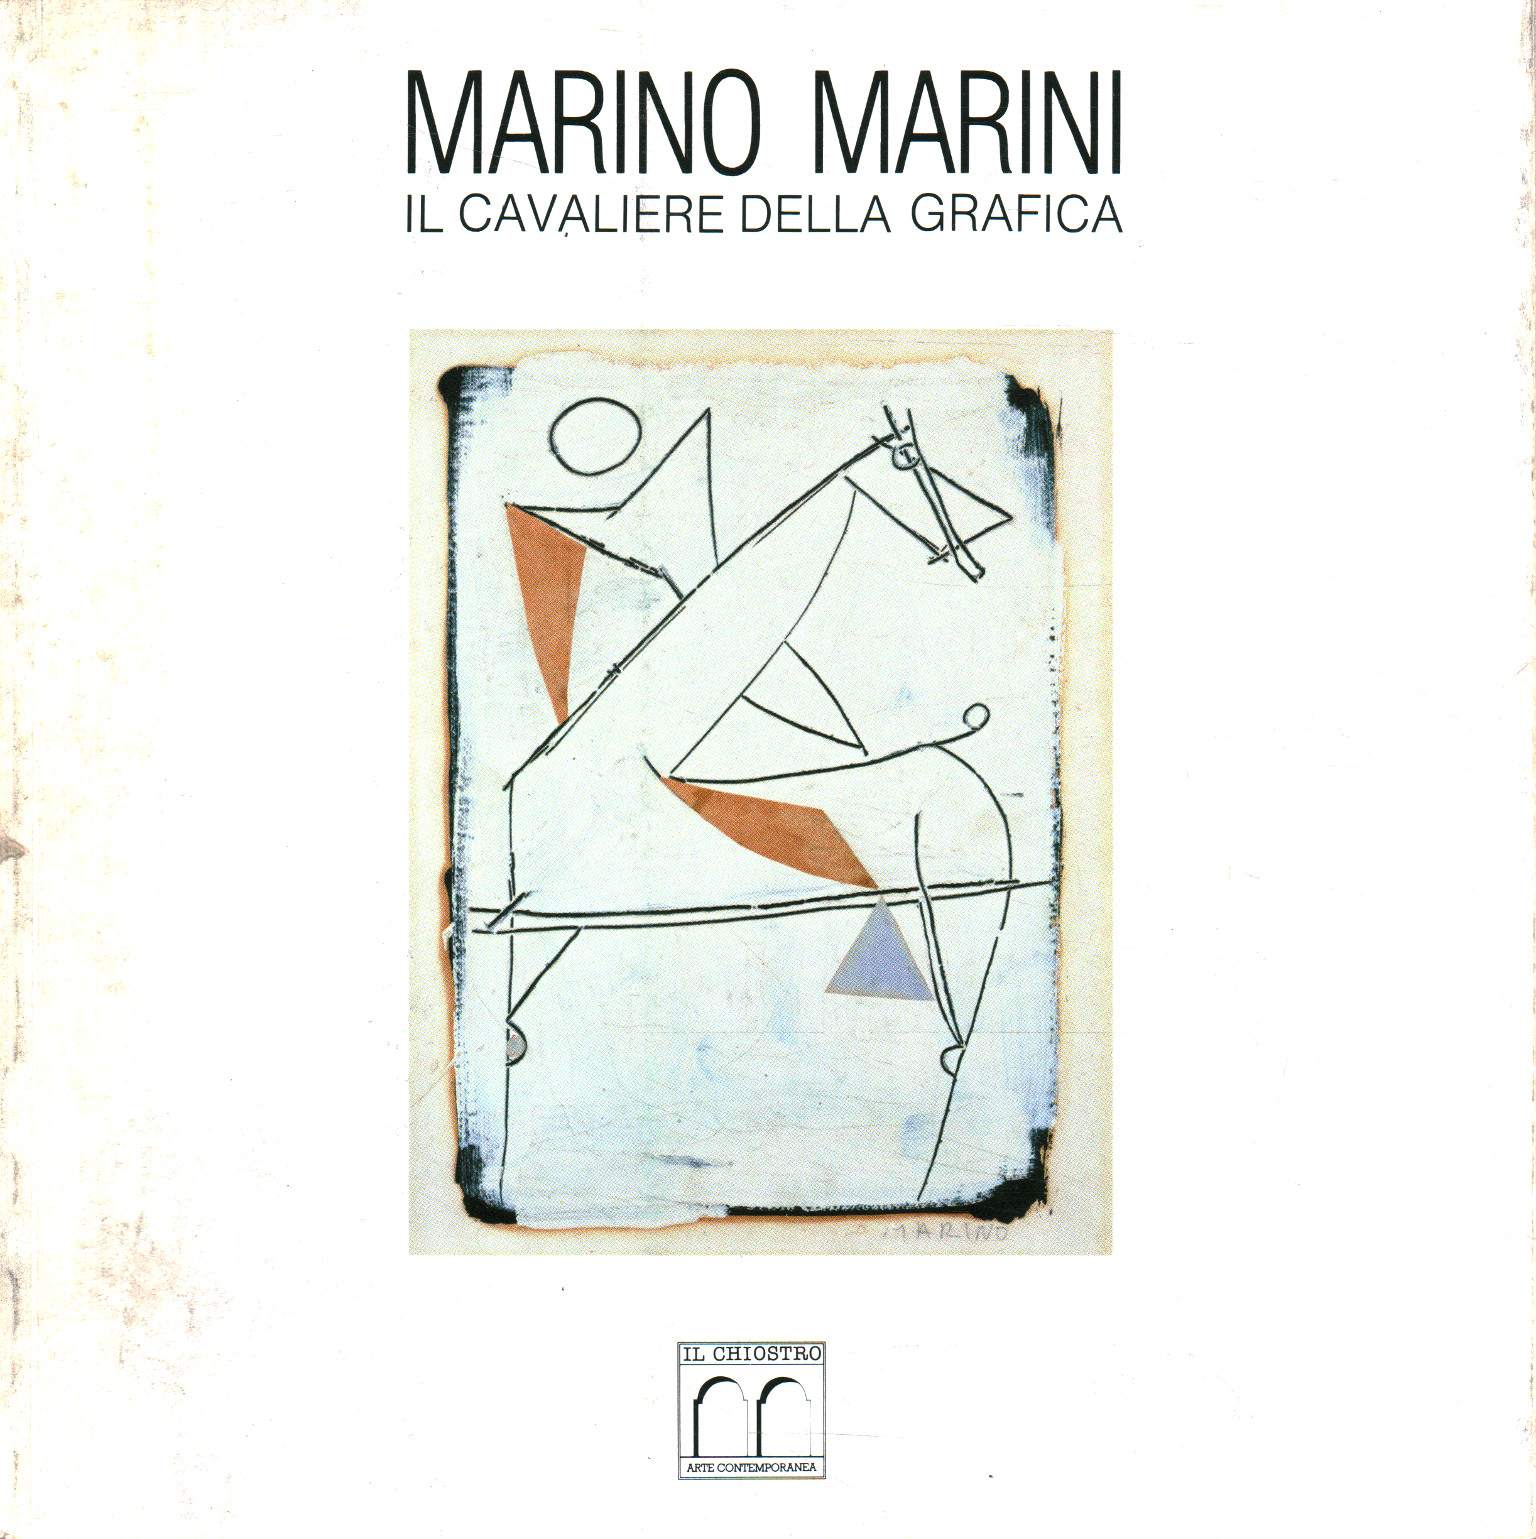 Marino Marini. The knight of the graph